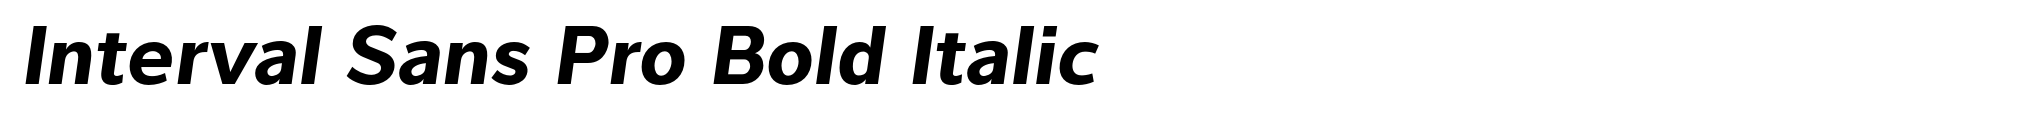 Interval Sans Pro Bold Italic image